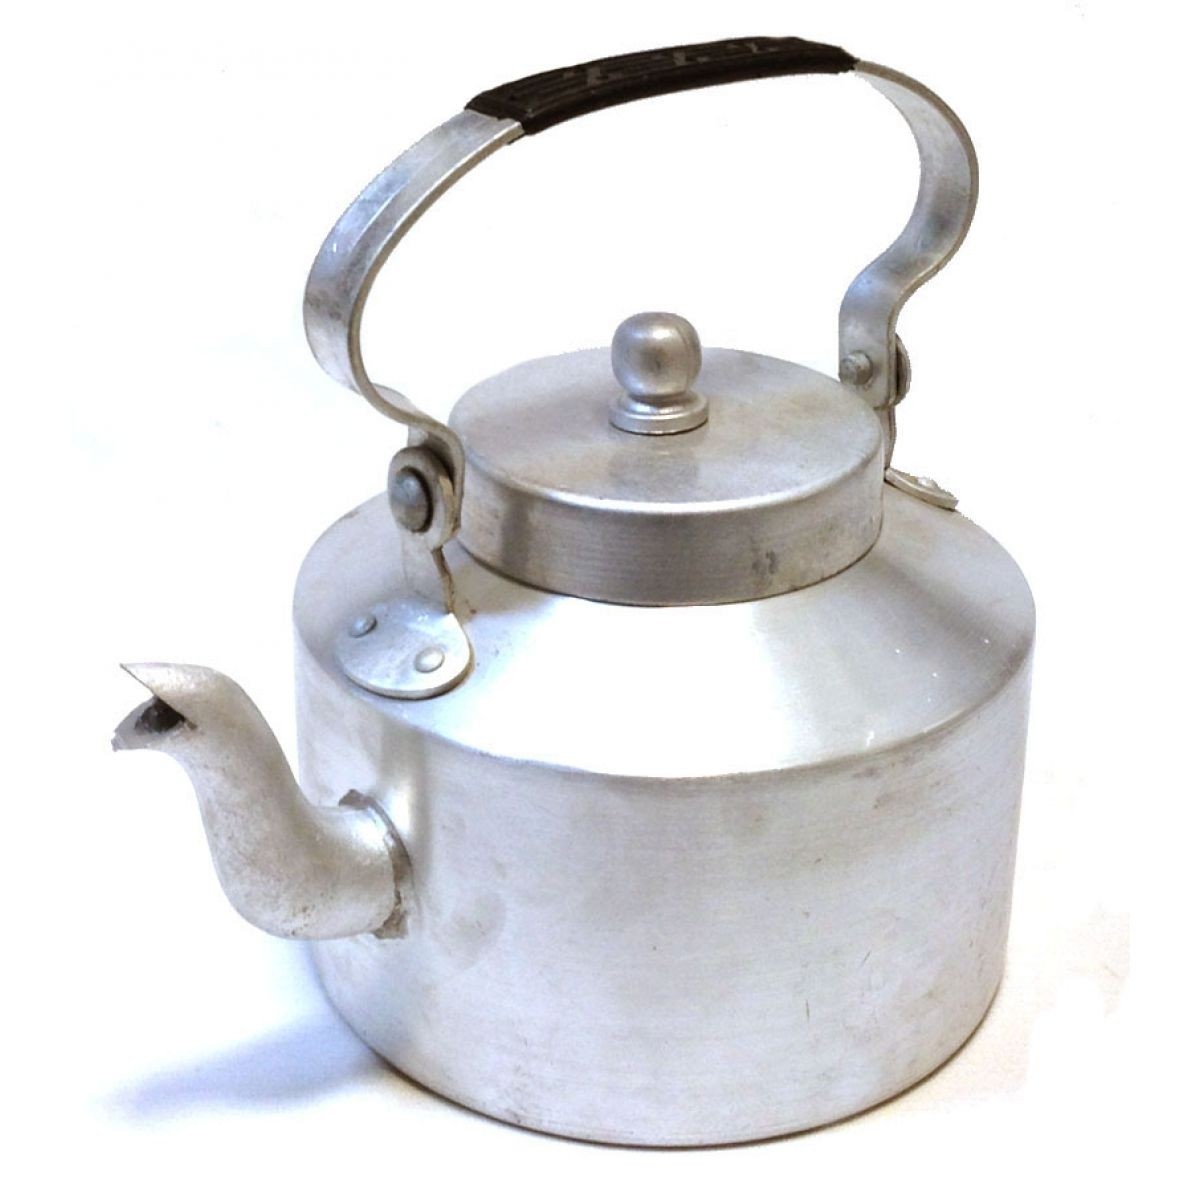 Aluminum tea kettle 2 5l